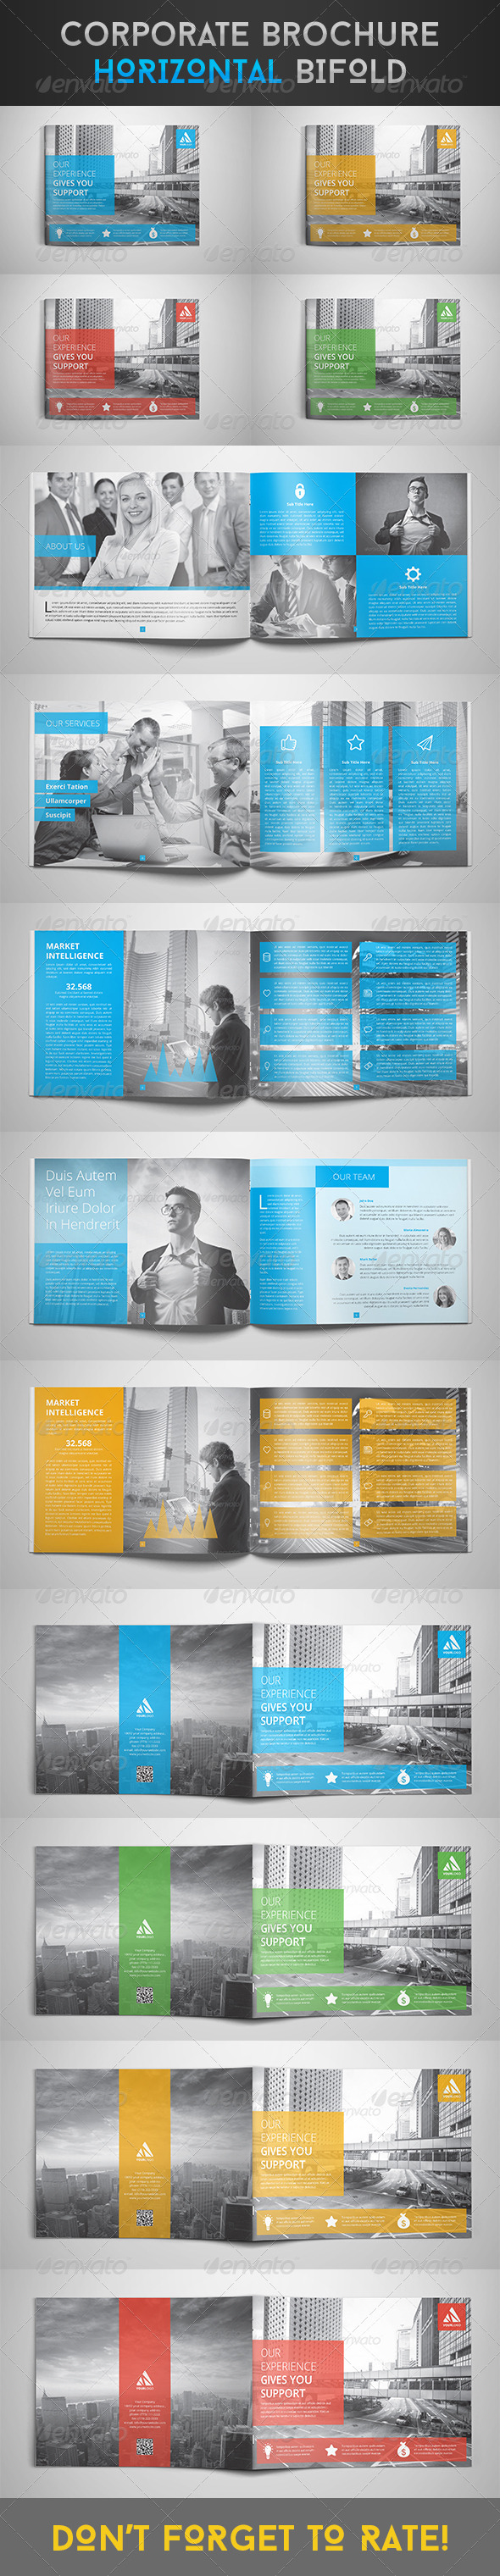 Corporate Brochure - Horizontal Bi-Fold (Corporate)